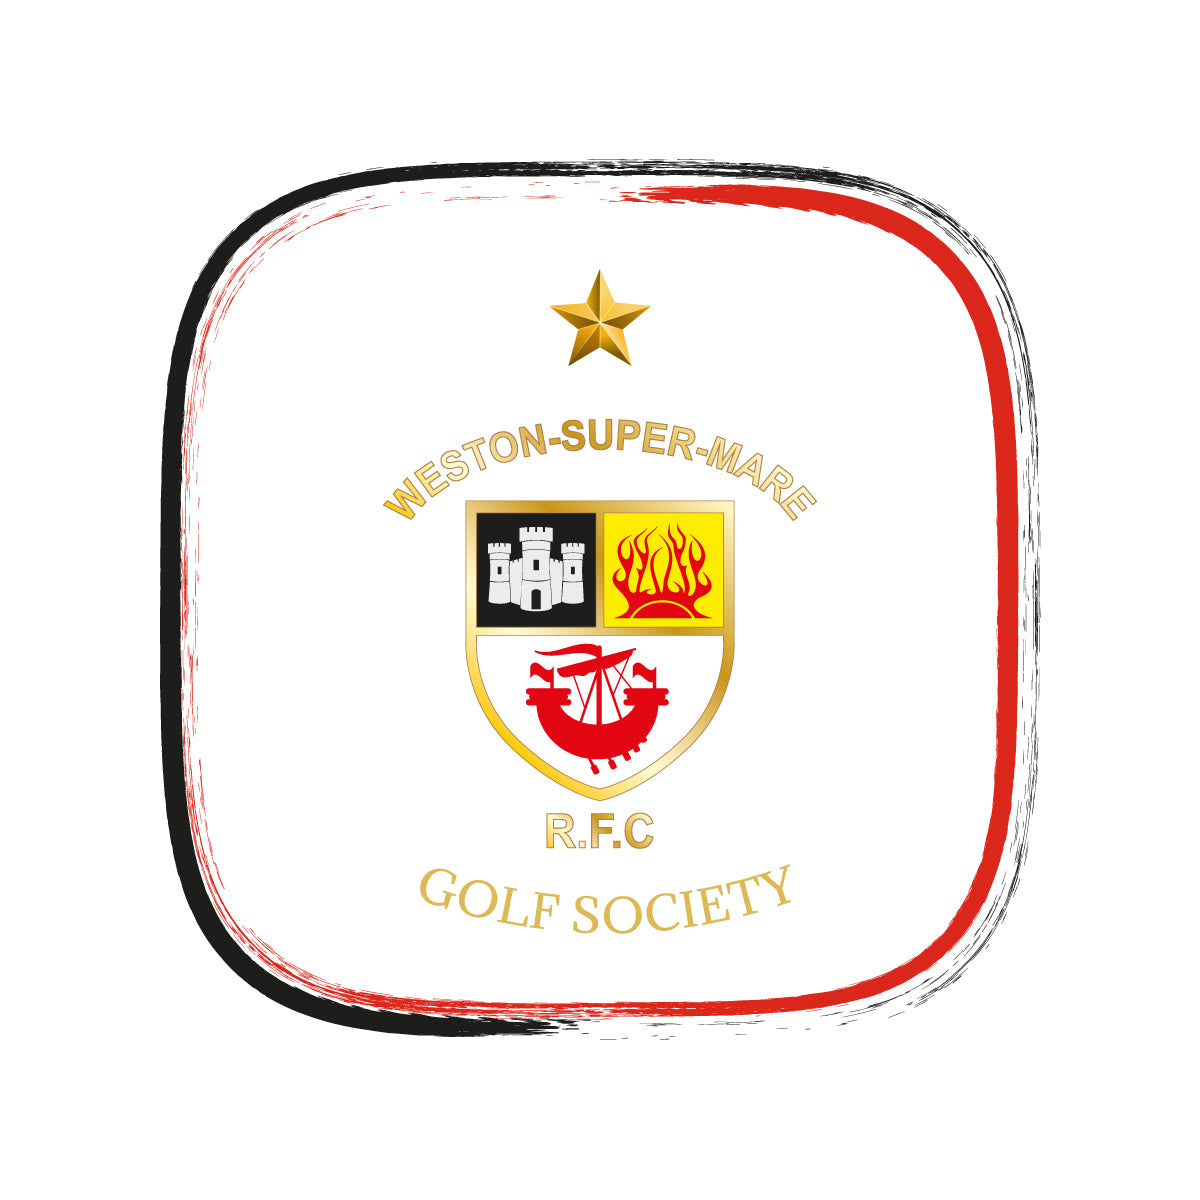 Weston-super-Mare RFC Golf Society